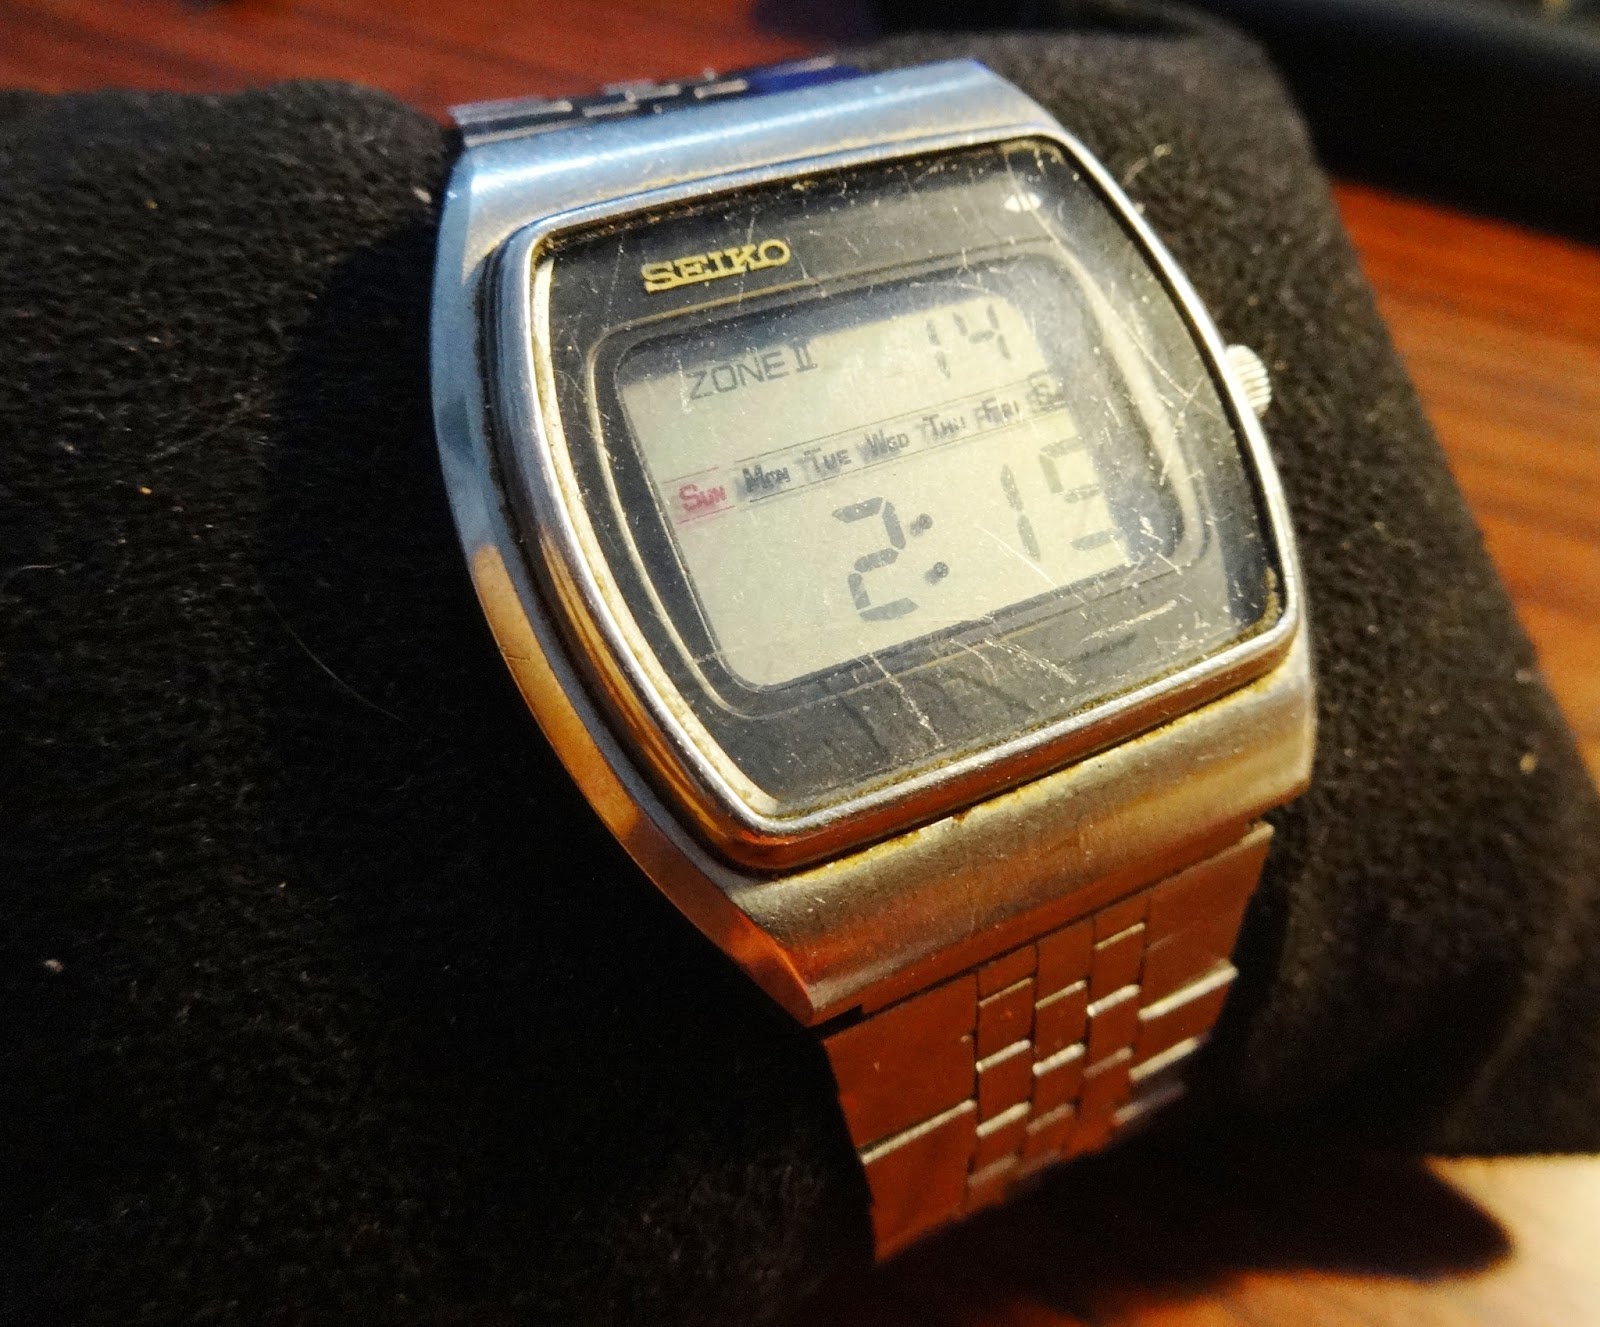 mircogarau: Orologio Seiko 0139-5000 LCD Digital Chronograph Watch rare ...